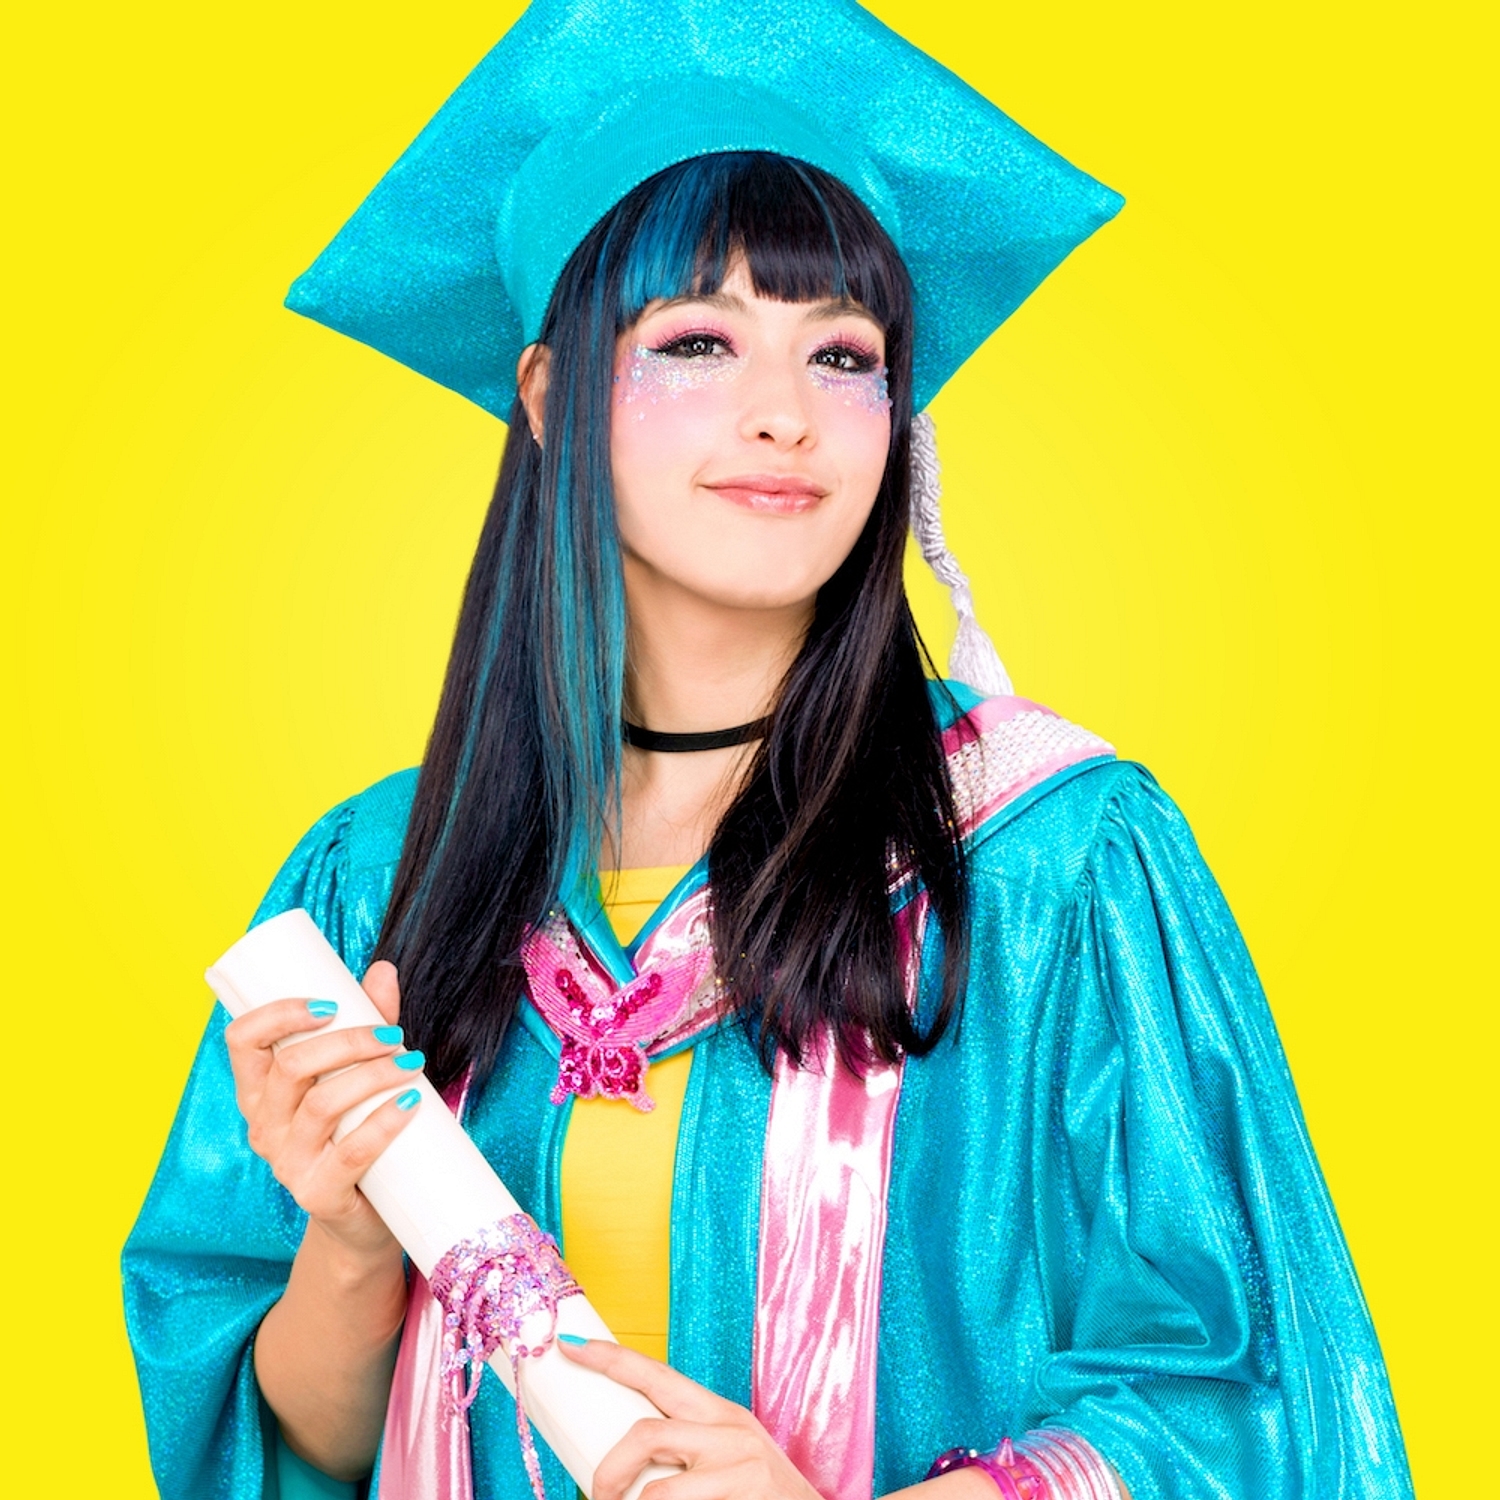 Kero Kero Bonito announce debut album 'Bonito Generation', share 'Graduation'